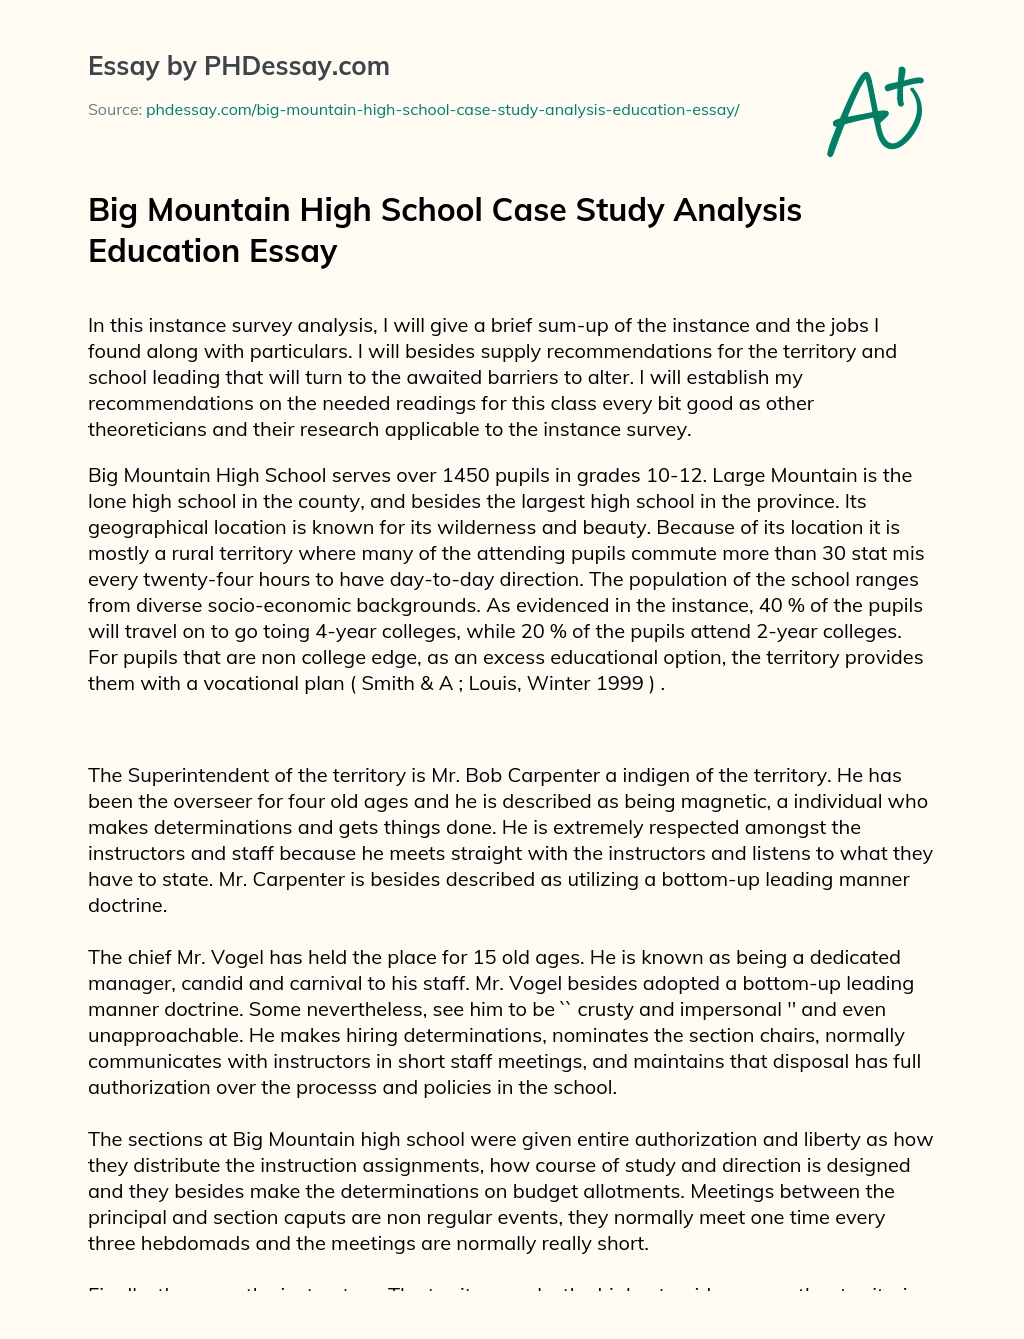 Big Mountain High School Case Study Analysis Education Essay essay